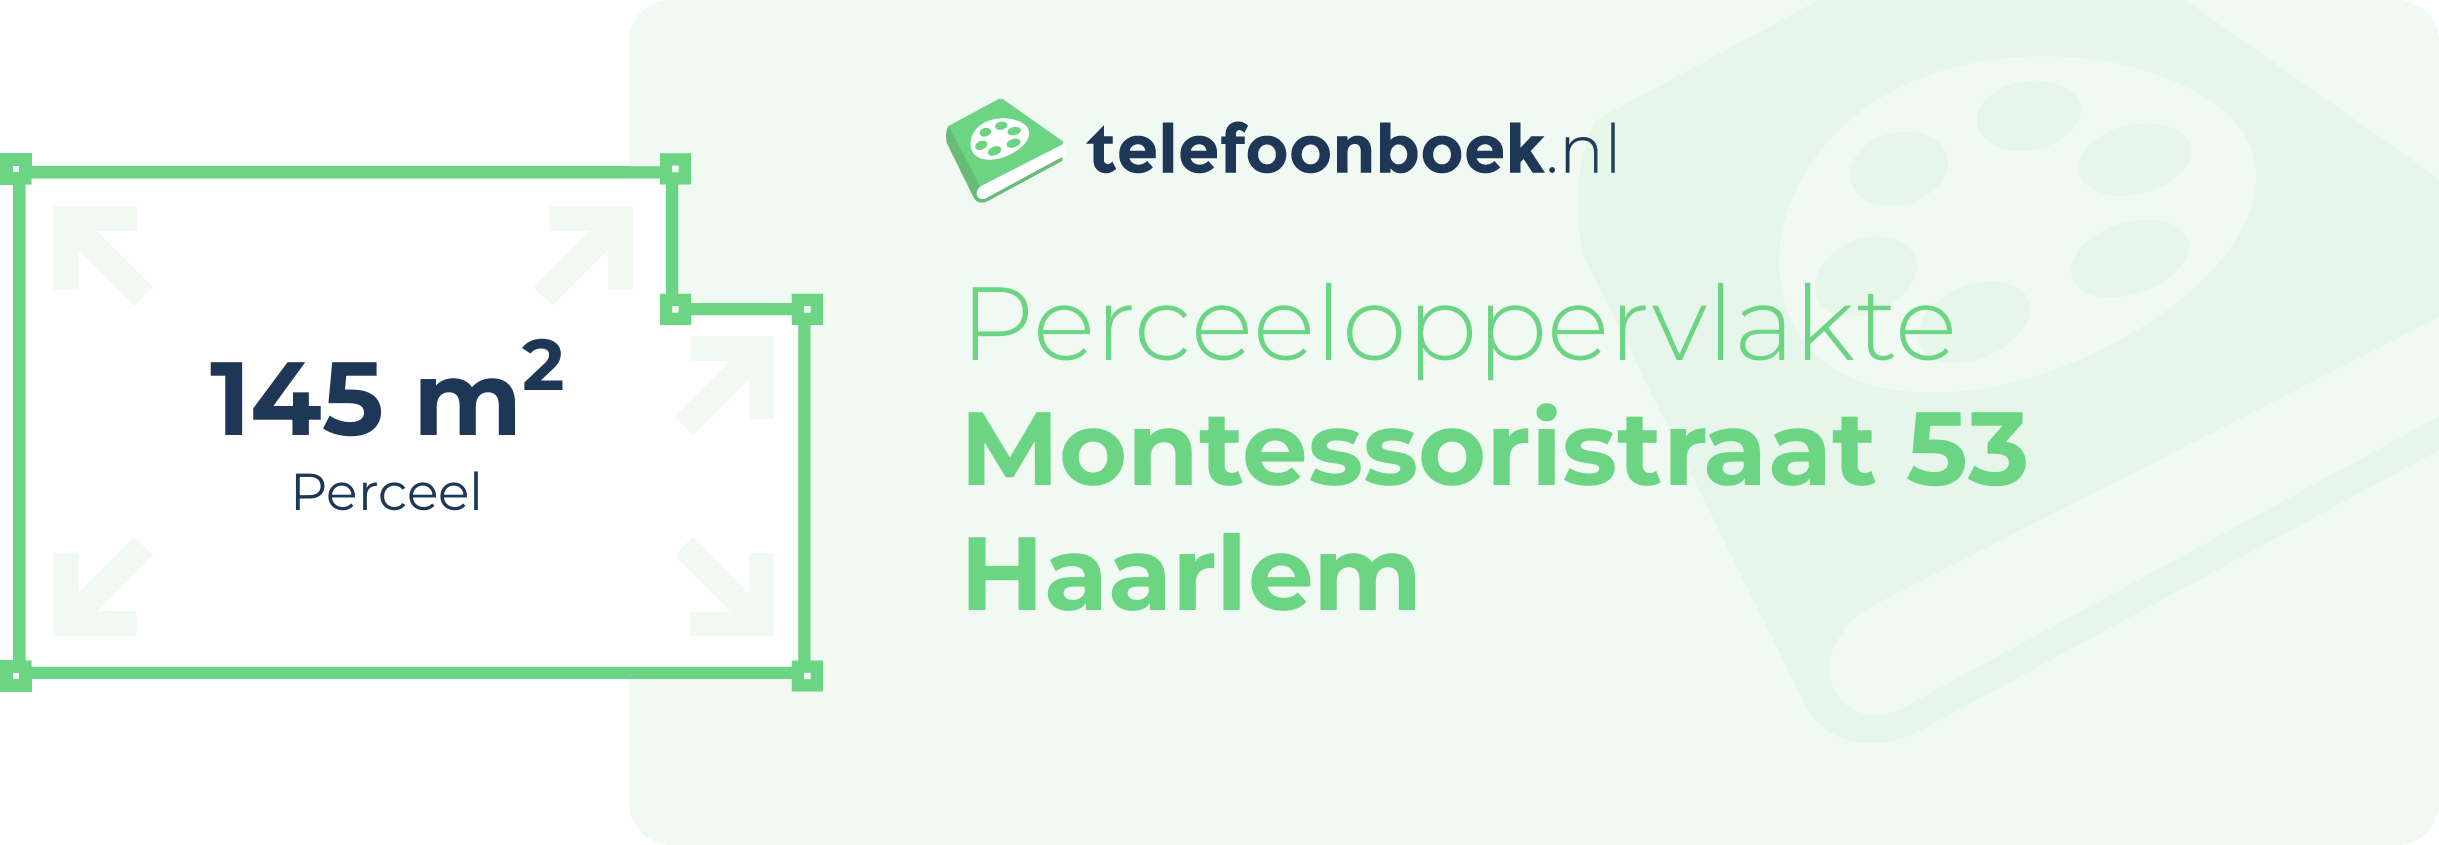 Perceeloppervlakte Montessoristraat 53 Haarlem